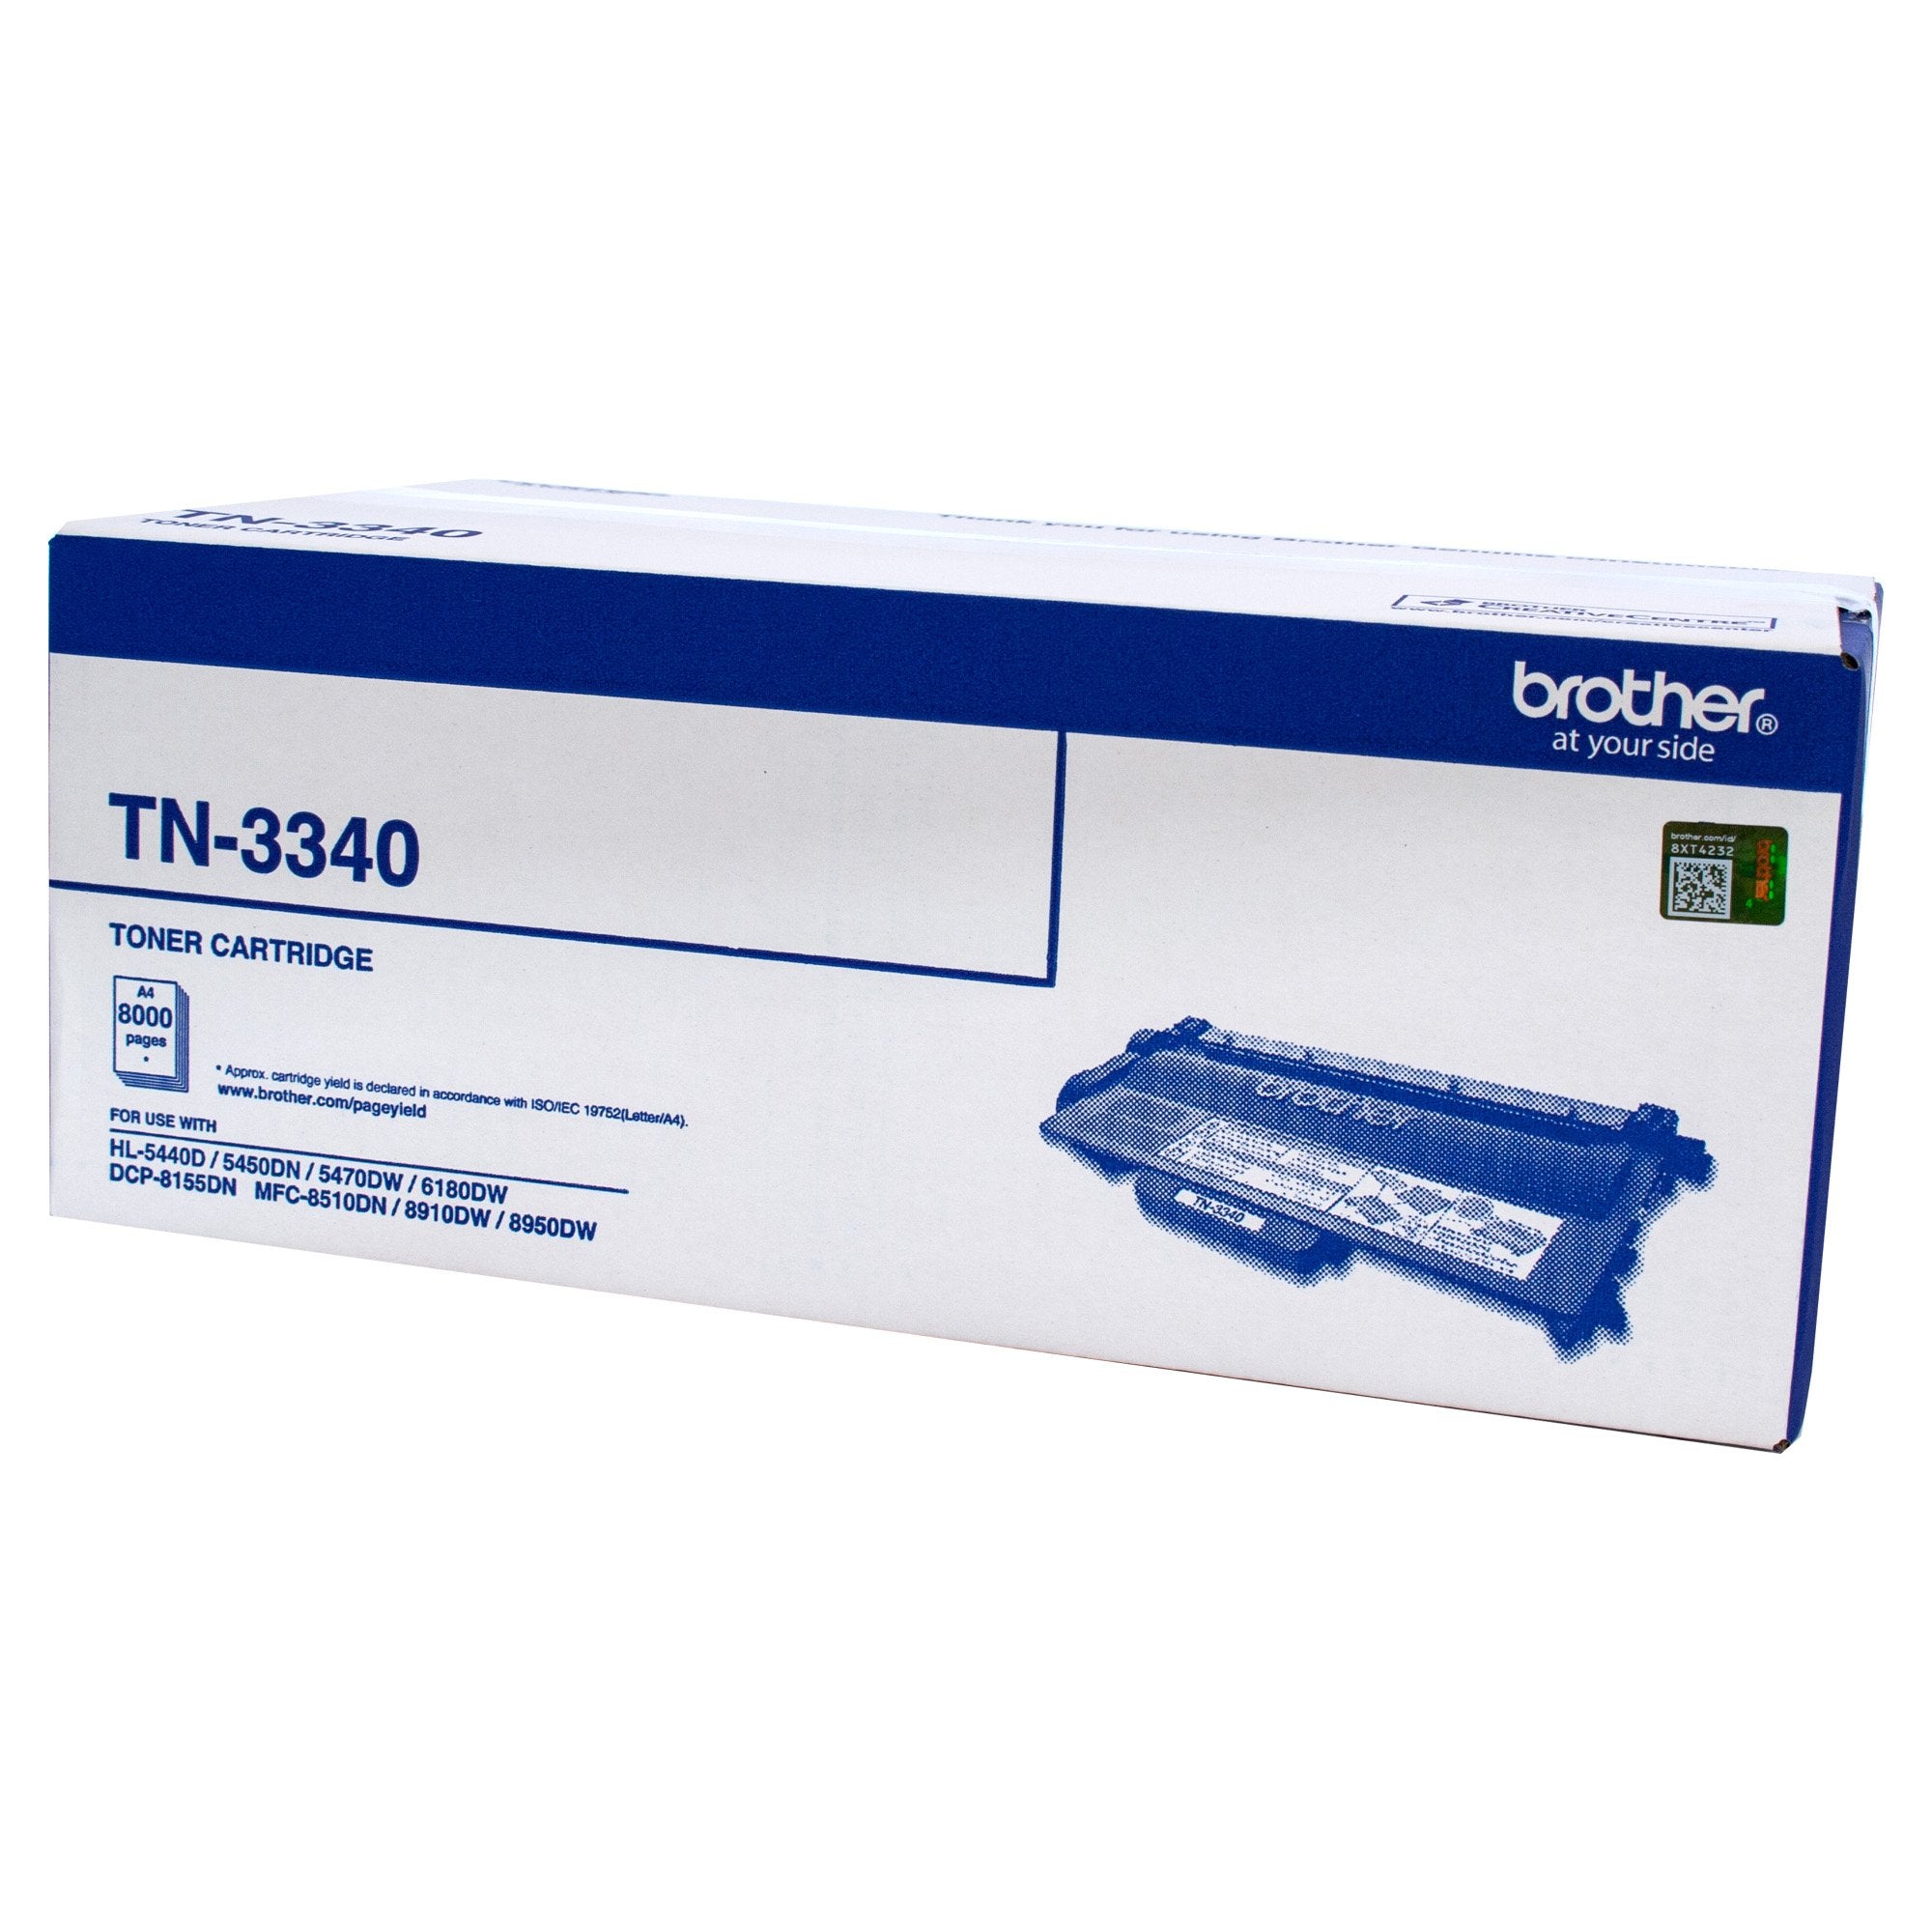 Brother TN-3340 Black Toner Cartridge